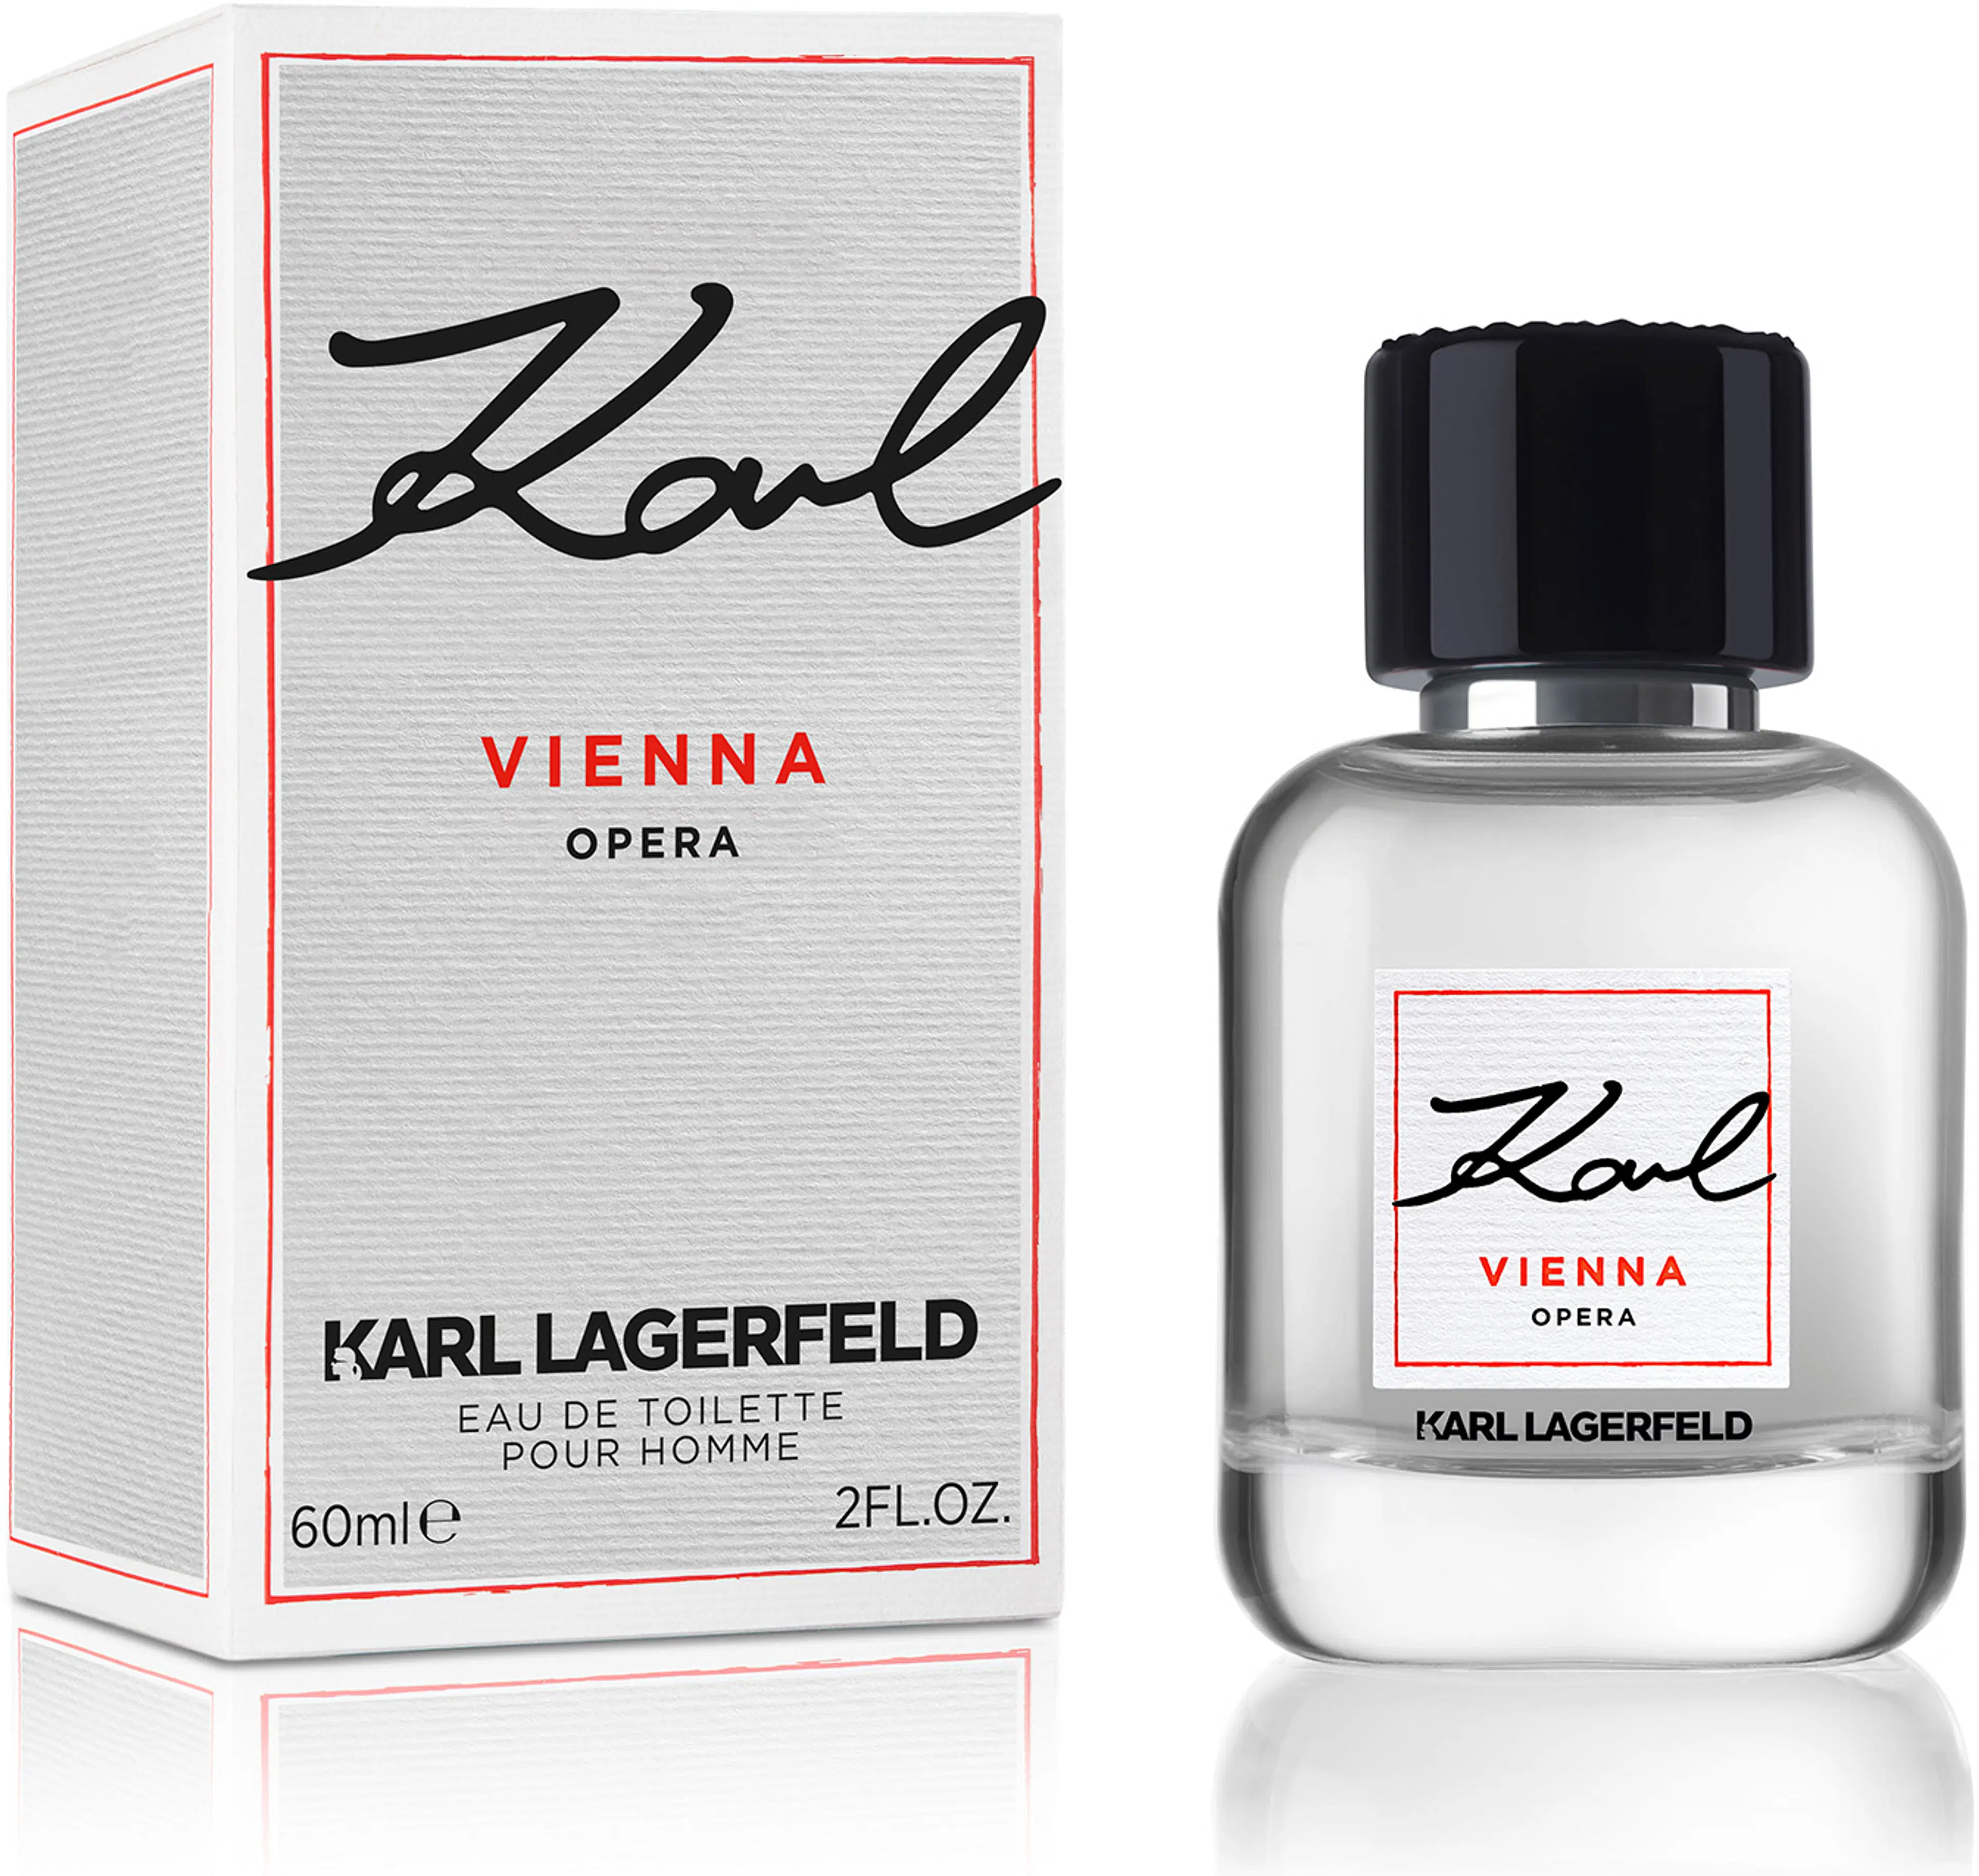 Karl Lagerfeld City Collection Vienna Opera EdT tuoksu 60 ml